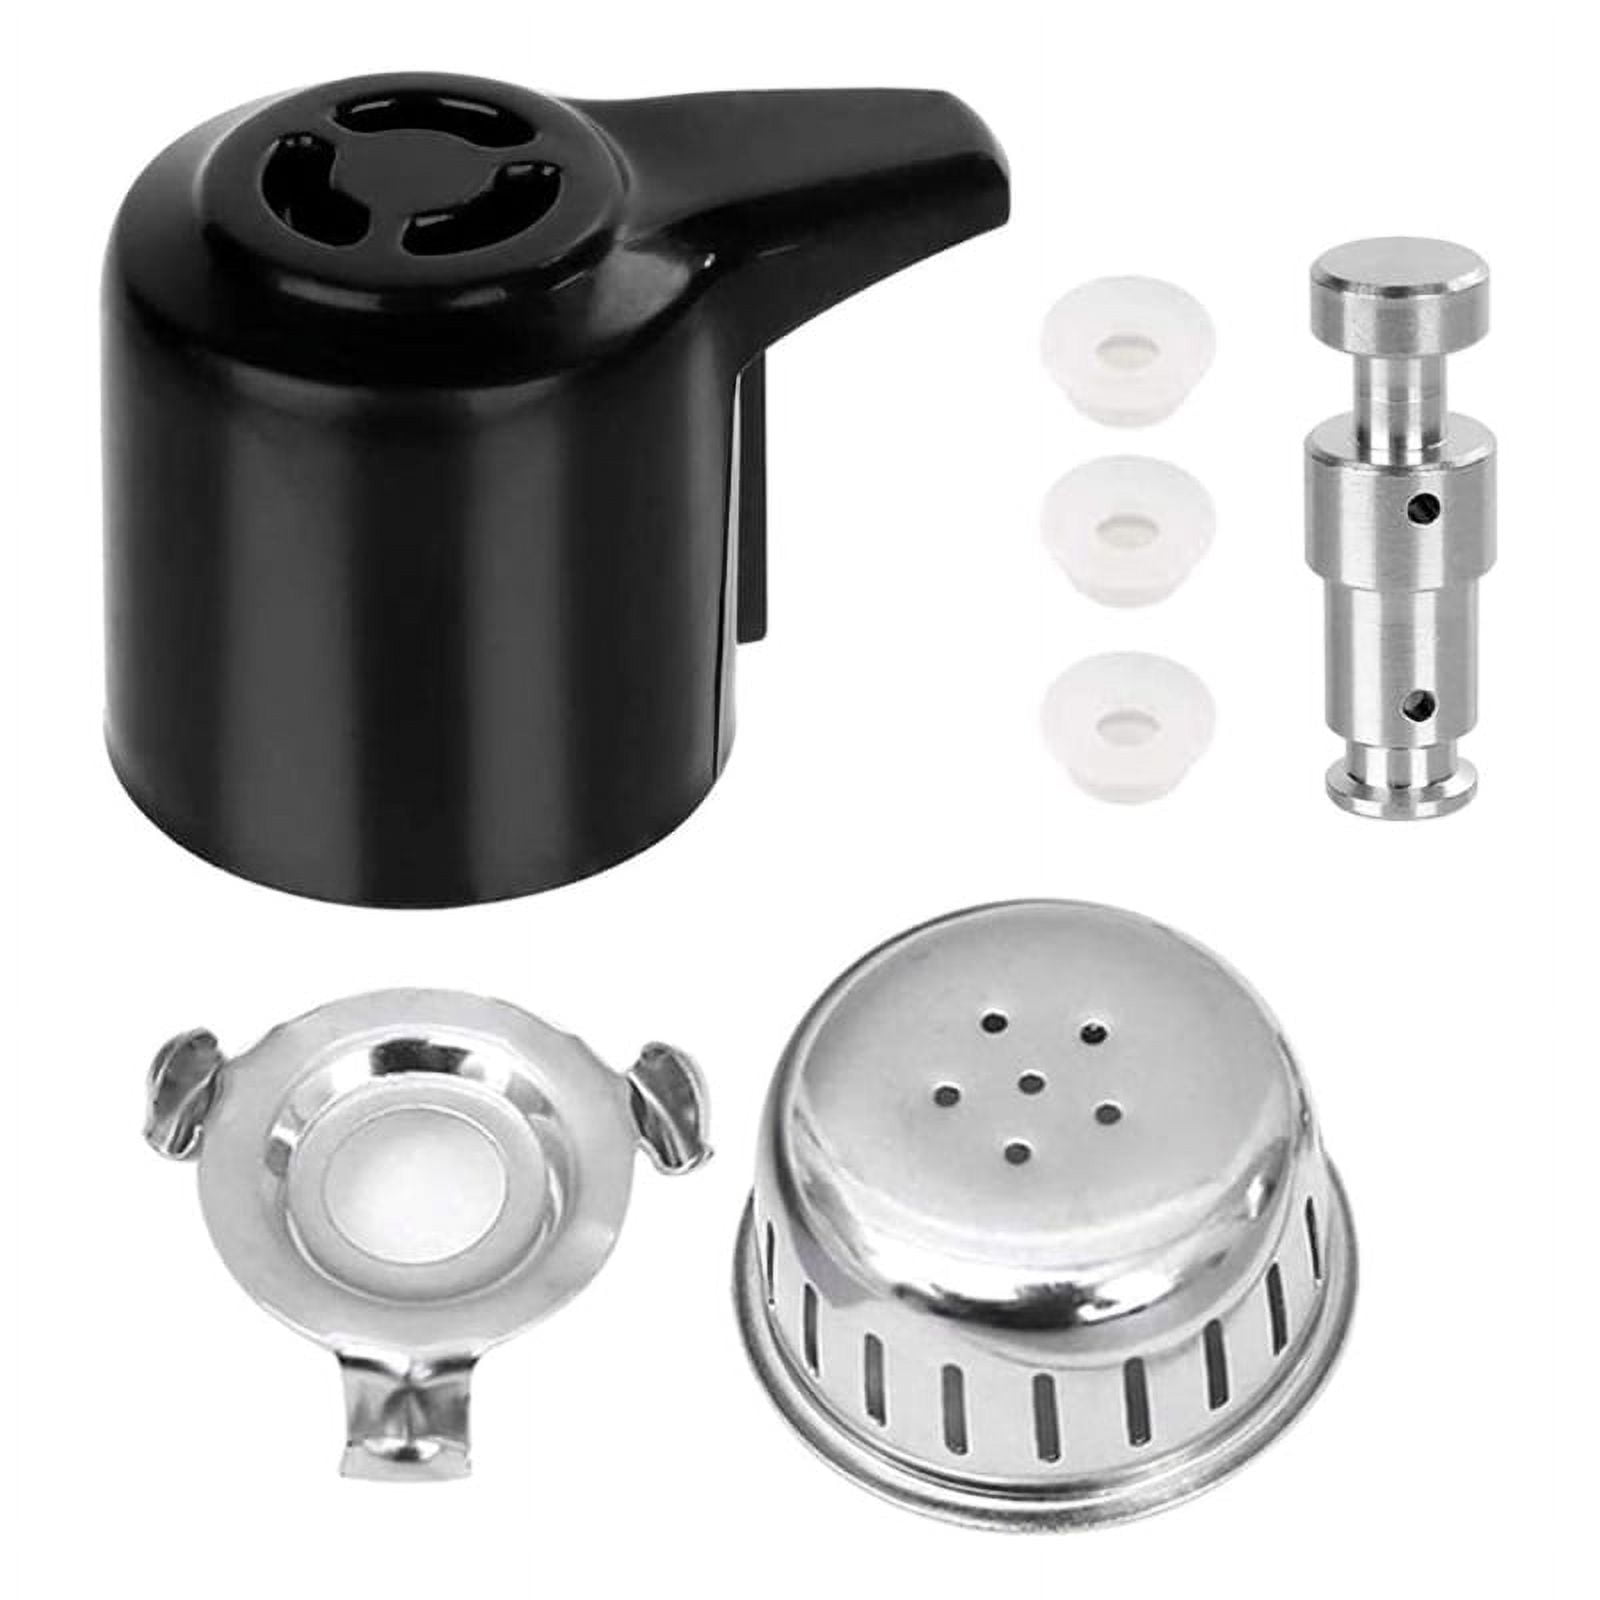  Floater Valve Sealer Gasket for Pressure Cooker 3 5 6 8 10 Quart  Models Replacement Accessories: Home & Kitchen